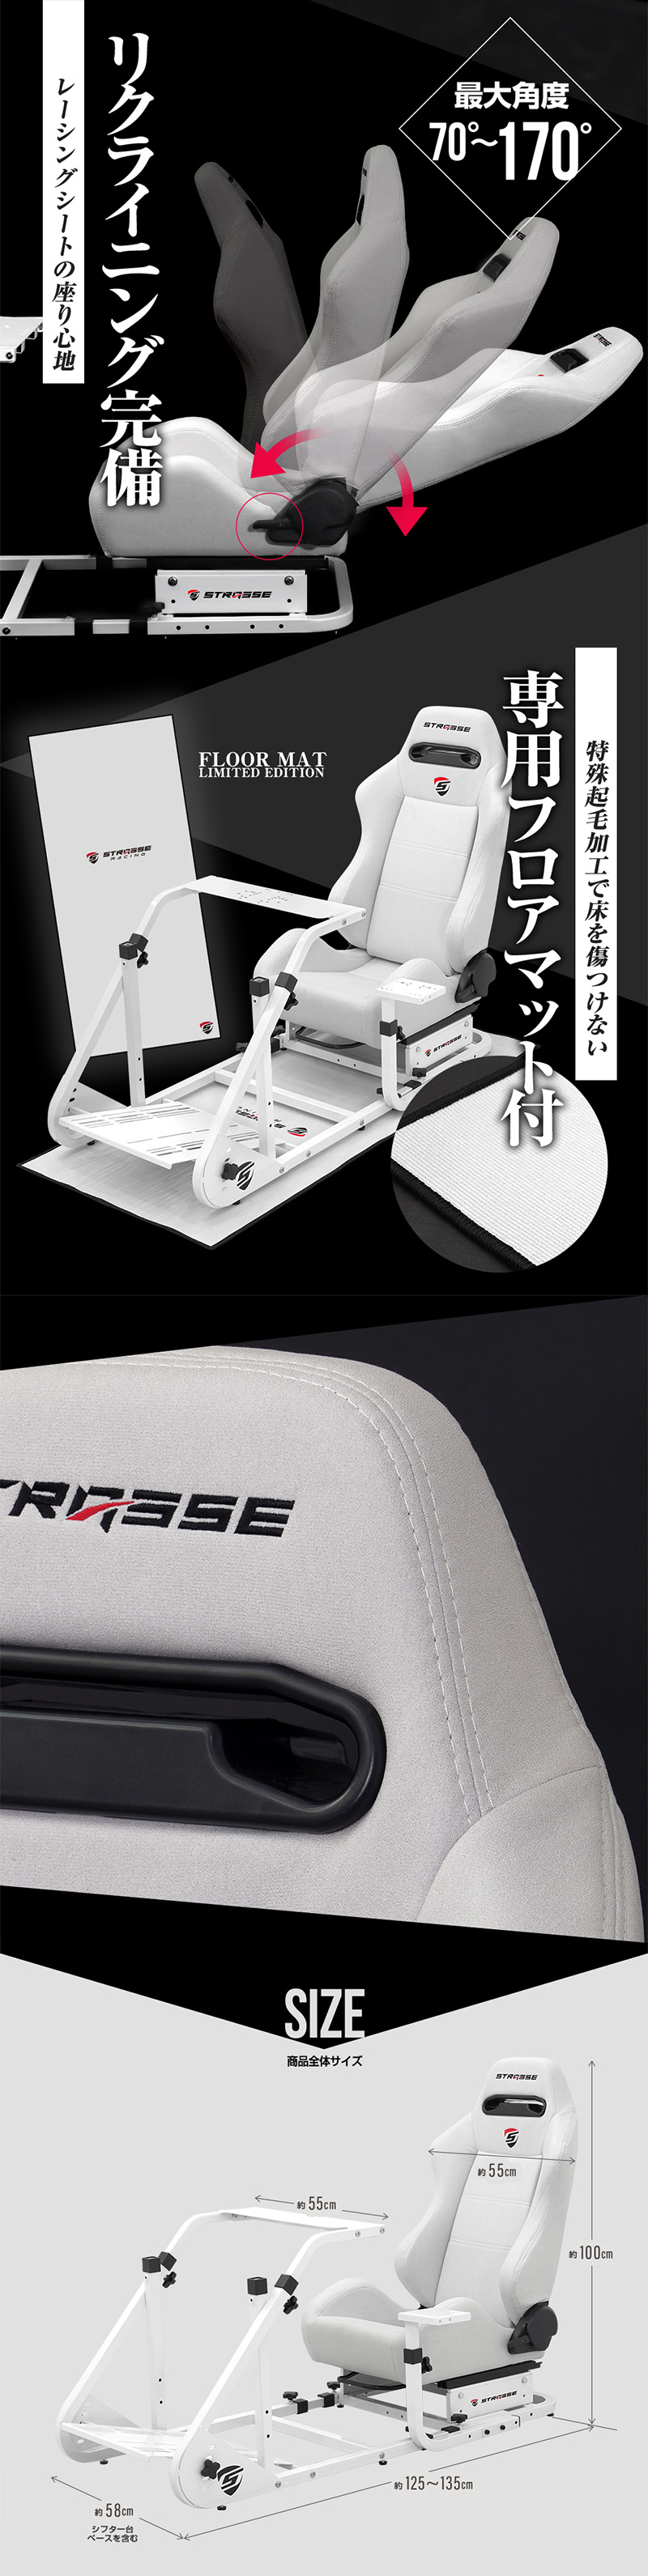 STRASSE RCZ01 WHITE LIMITED EDITION｜ レーシングコックピットベース 